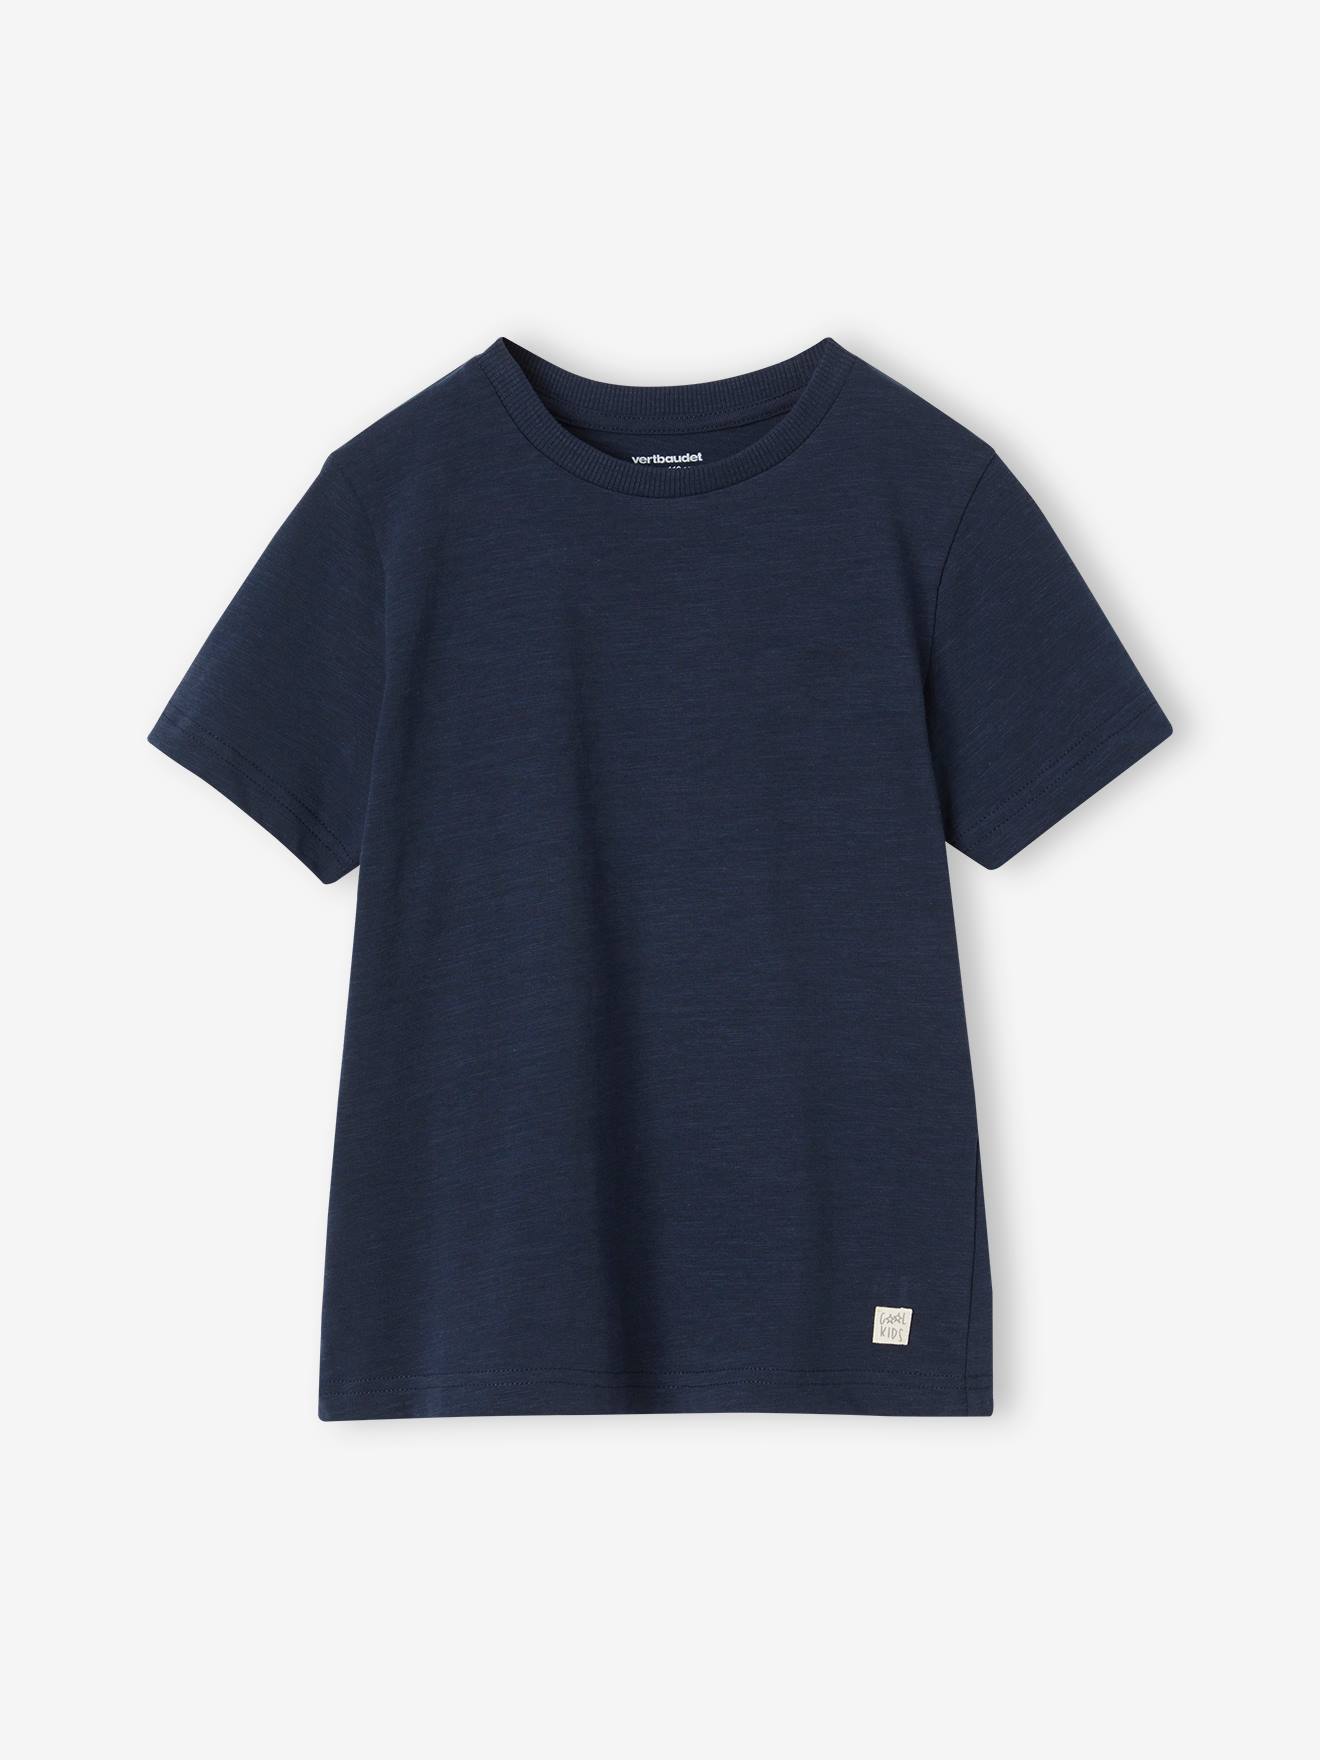 Short Sleeve T-Shirt, for Boys navy blue